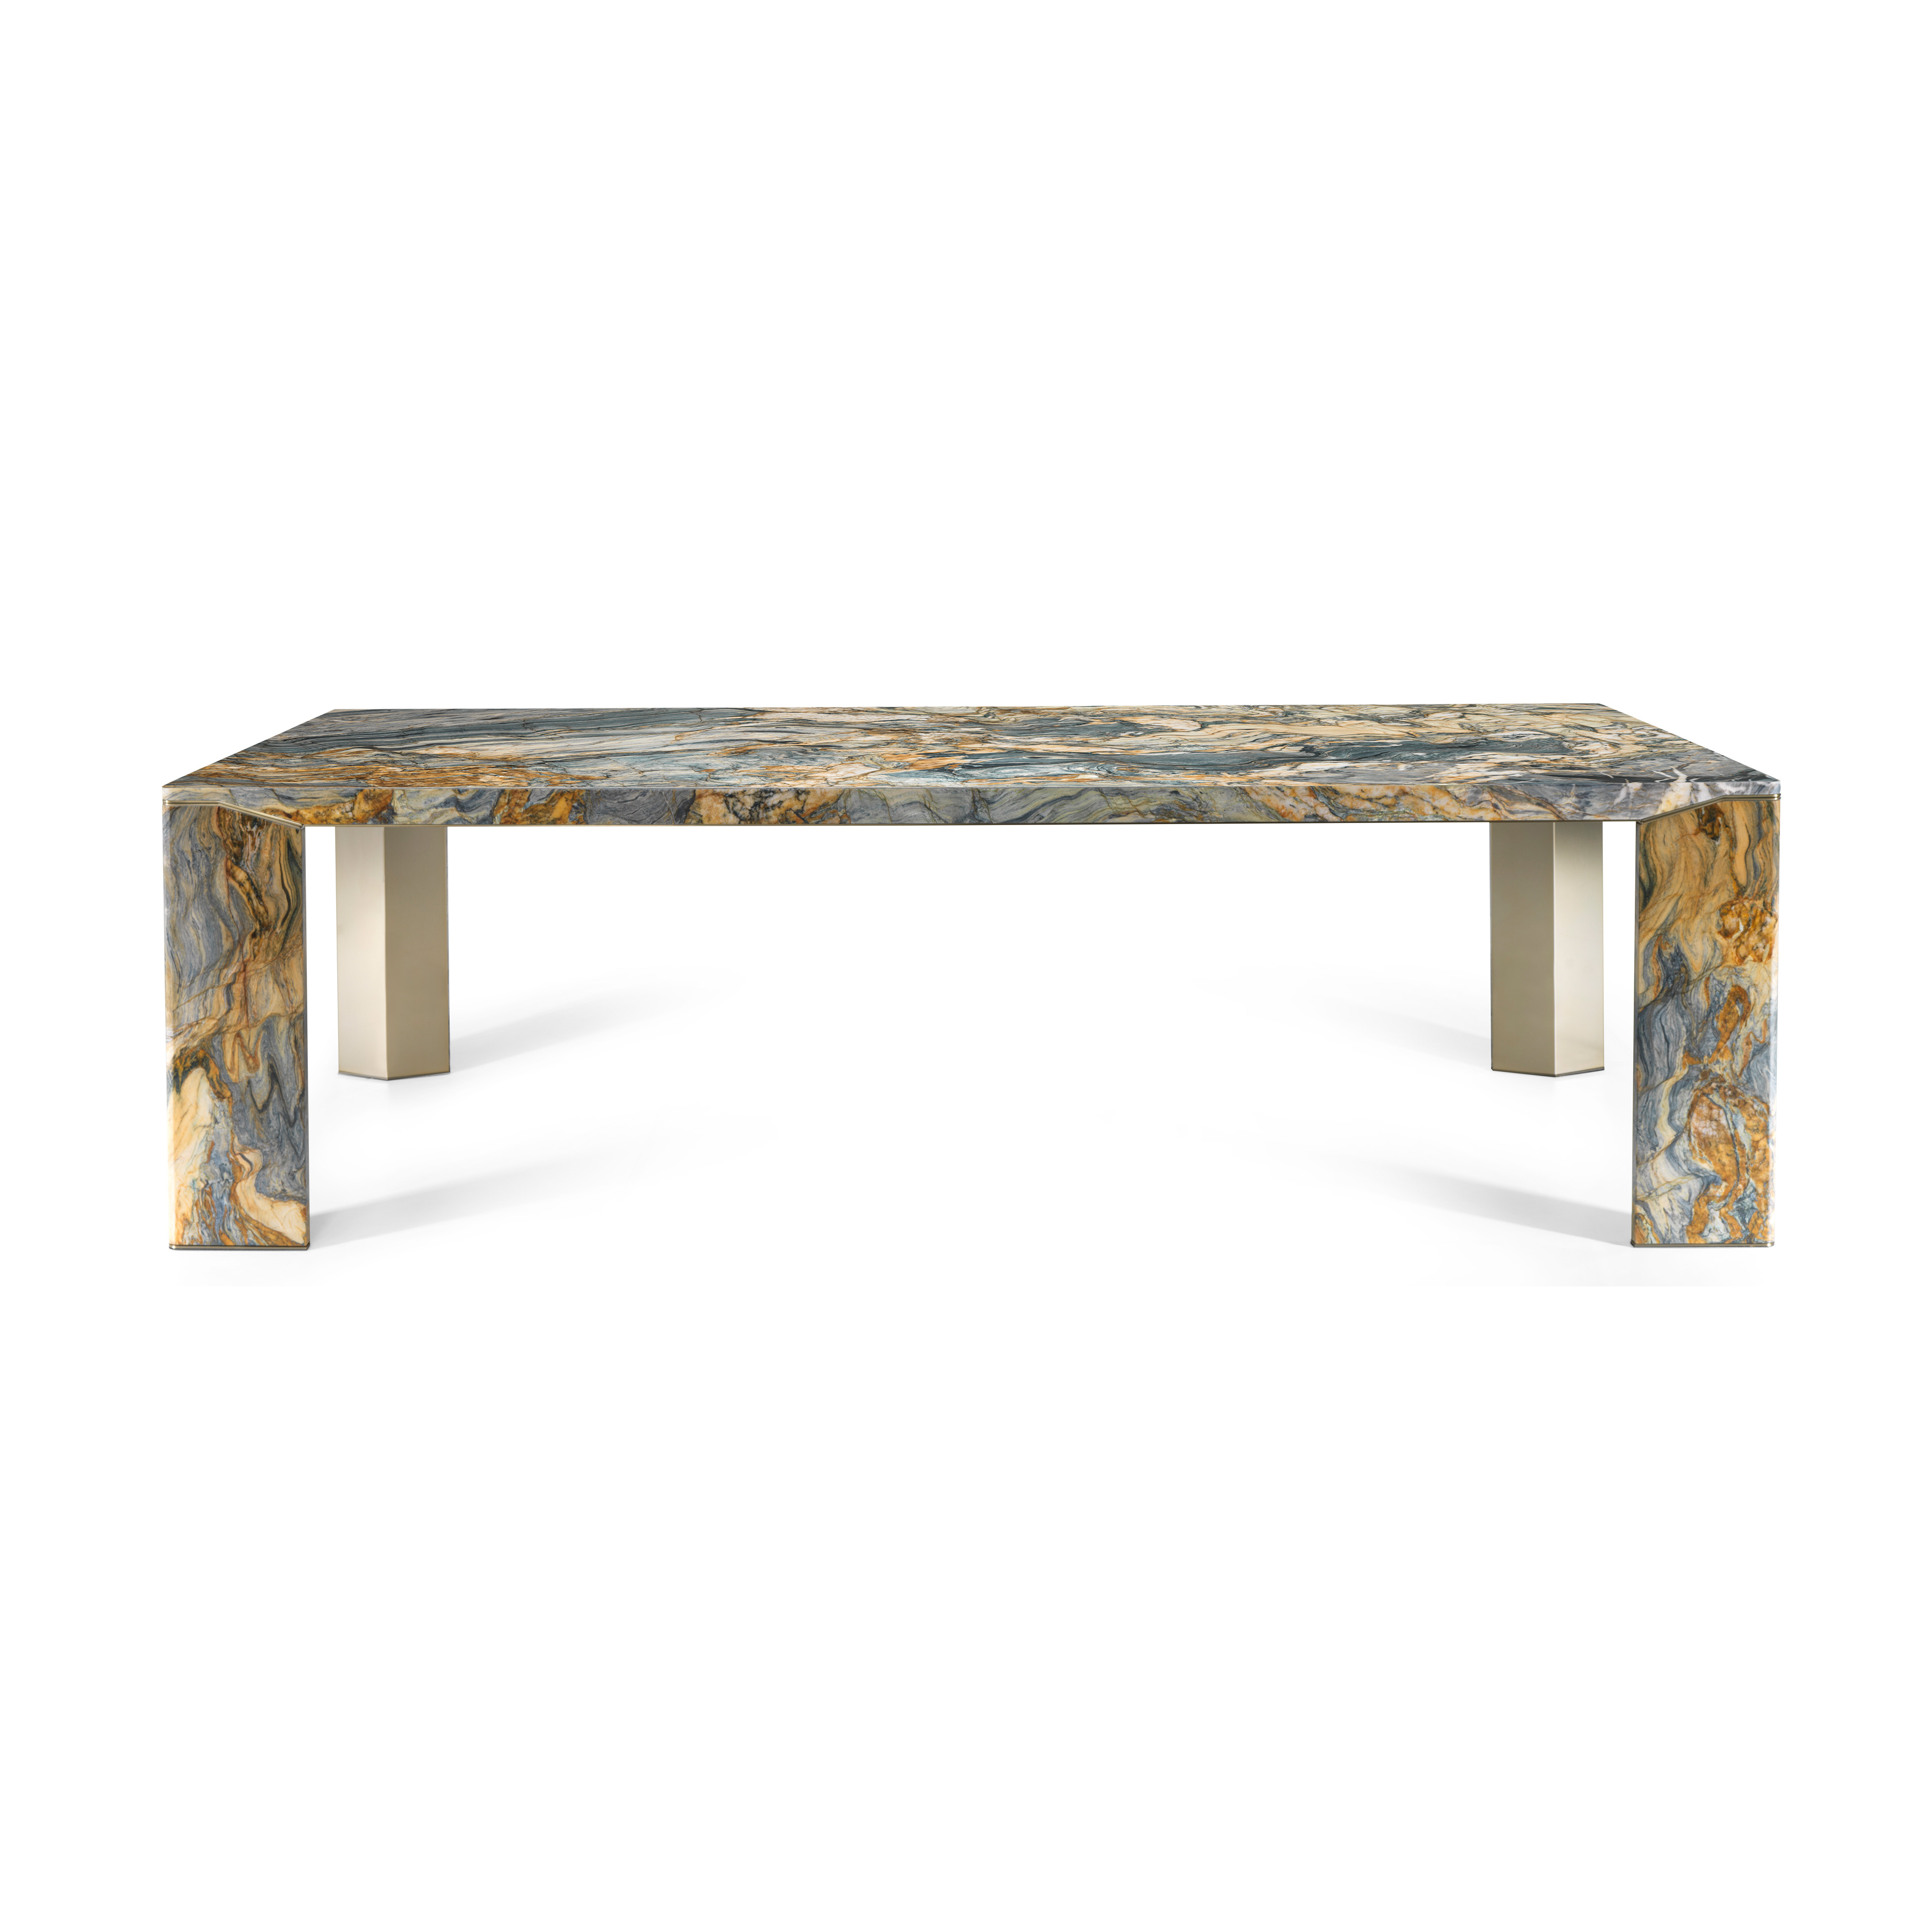 stone-dining-table-gallery-02-jpg